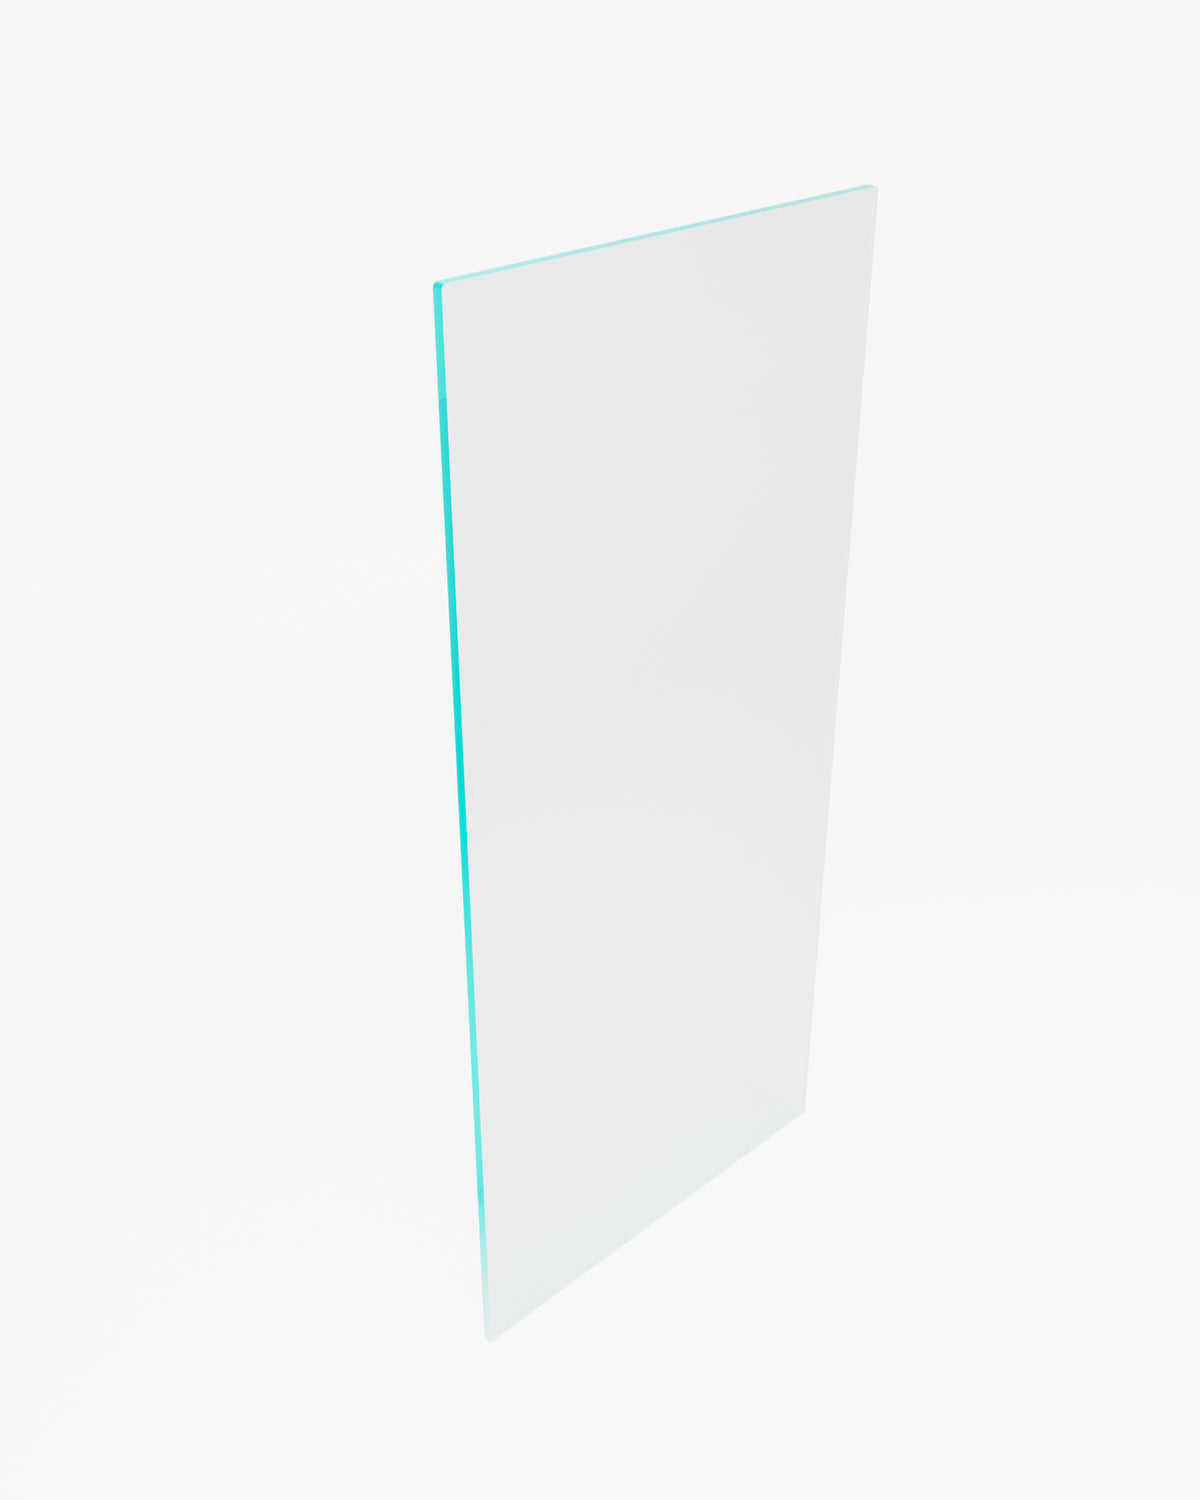 Channel Glazed Glass Pool Fence Glass Panels, 1350mm high, Choose Width